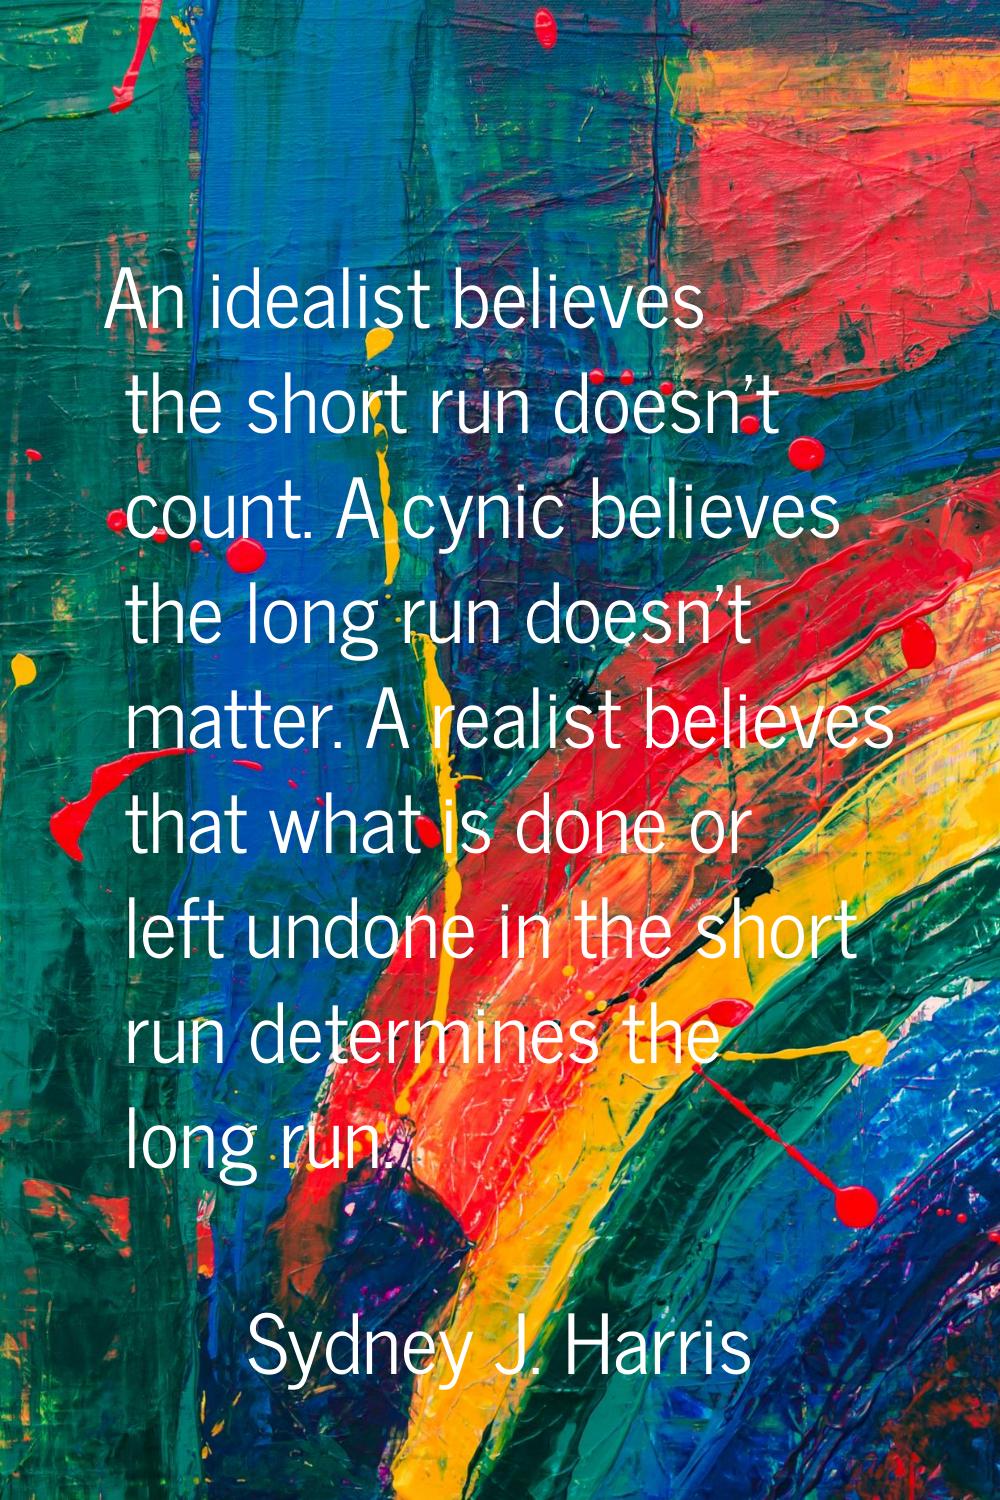 An idealist believes the short run doesn't count. A cynic believes the long run doesn't matter. A r